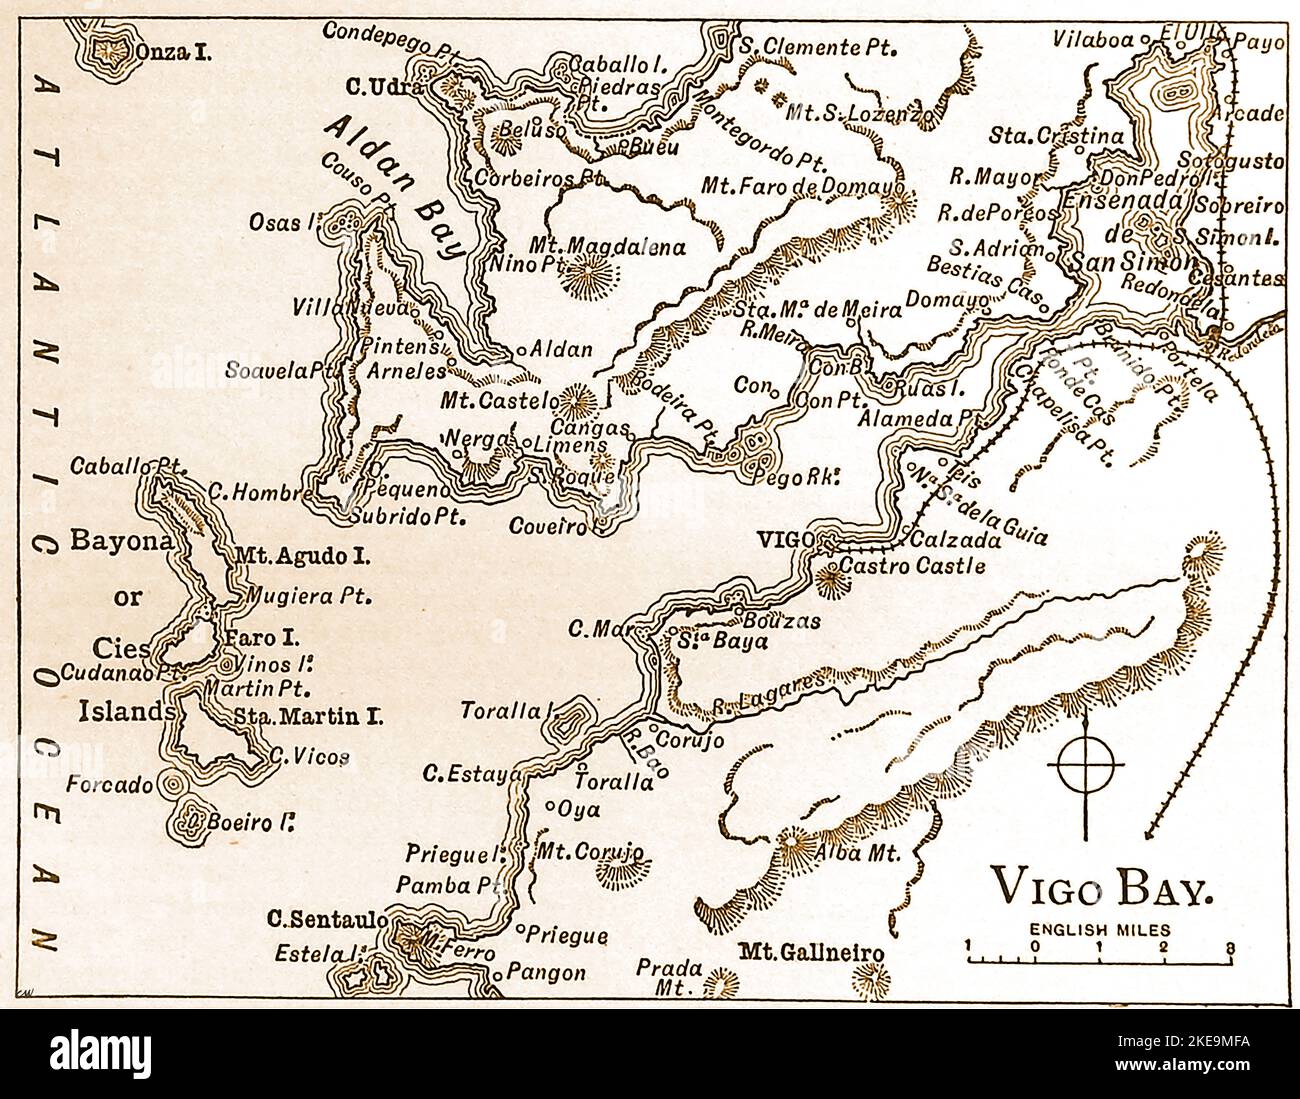 An 1890's  old map of Vigo Bay, Spain. Vigo Bay is one of the settings for Jules Verne's novel ,Twenty Thousand Leagues Under the Sea. Historically the area is known for The Battle of Vigo Bay, a.k.a. the  Battle of Rande /  Batalla de Rande fought  at sea on 23 October 1702 during the early years of the War of the Spanish Succession.  ---  Un mapa antiguo de 1890 de la bahía de Vigo, España. La bahía de Vigo es uno de los escenarios de la novela de Julio Verne, Veinte mil leguas de viaje submarino y Batalla de Rande (1702), Stock Photo